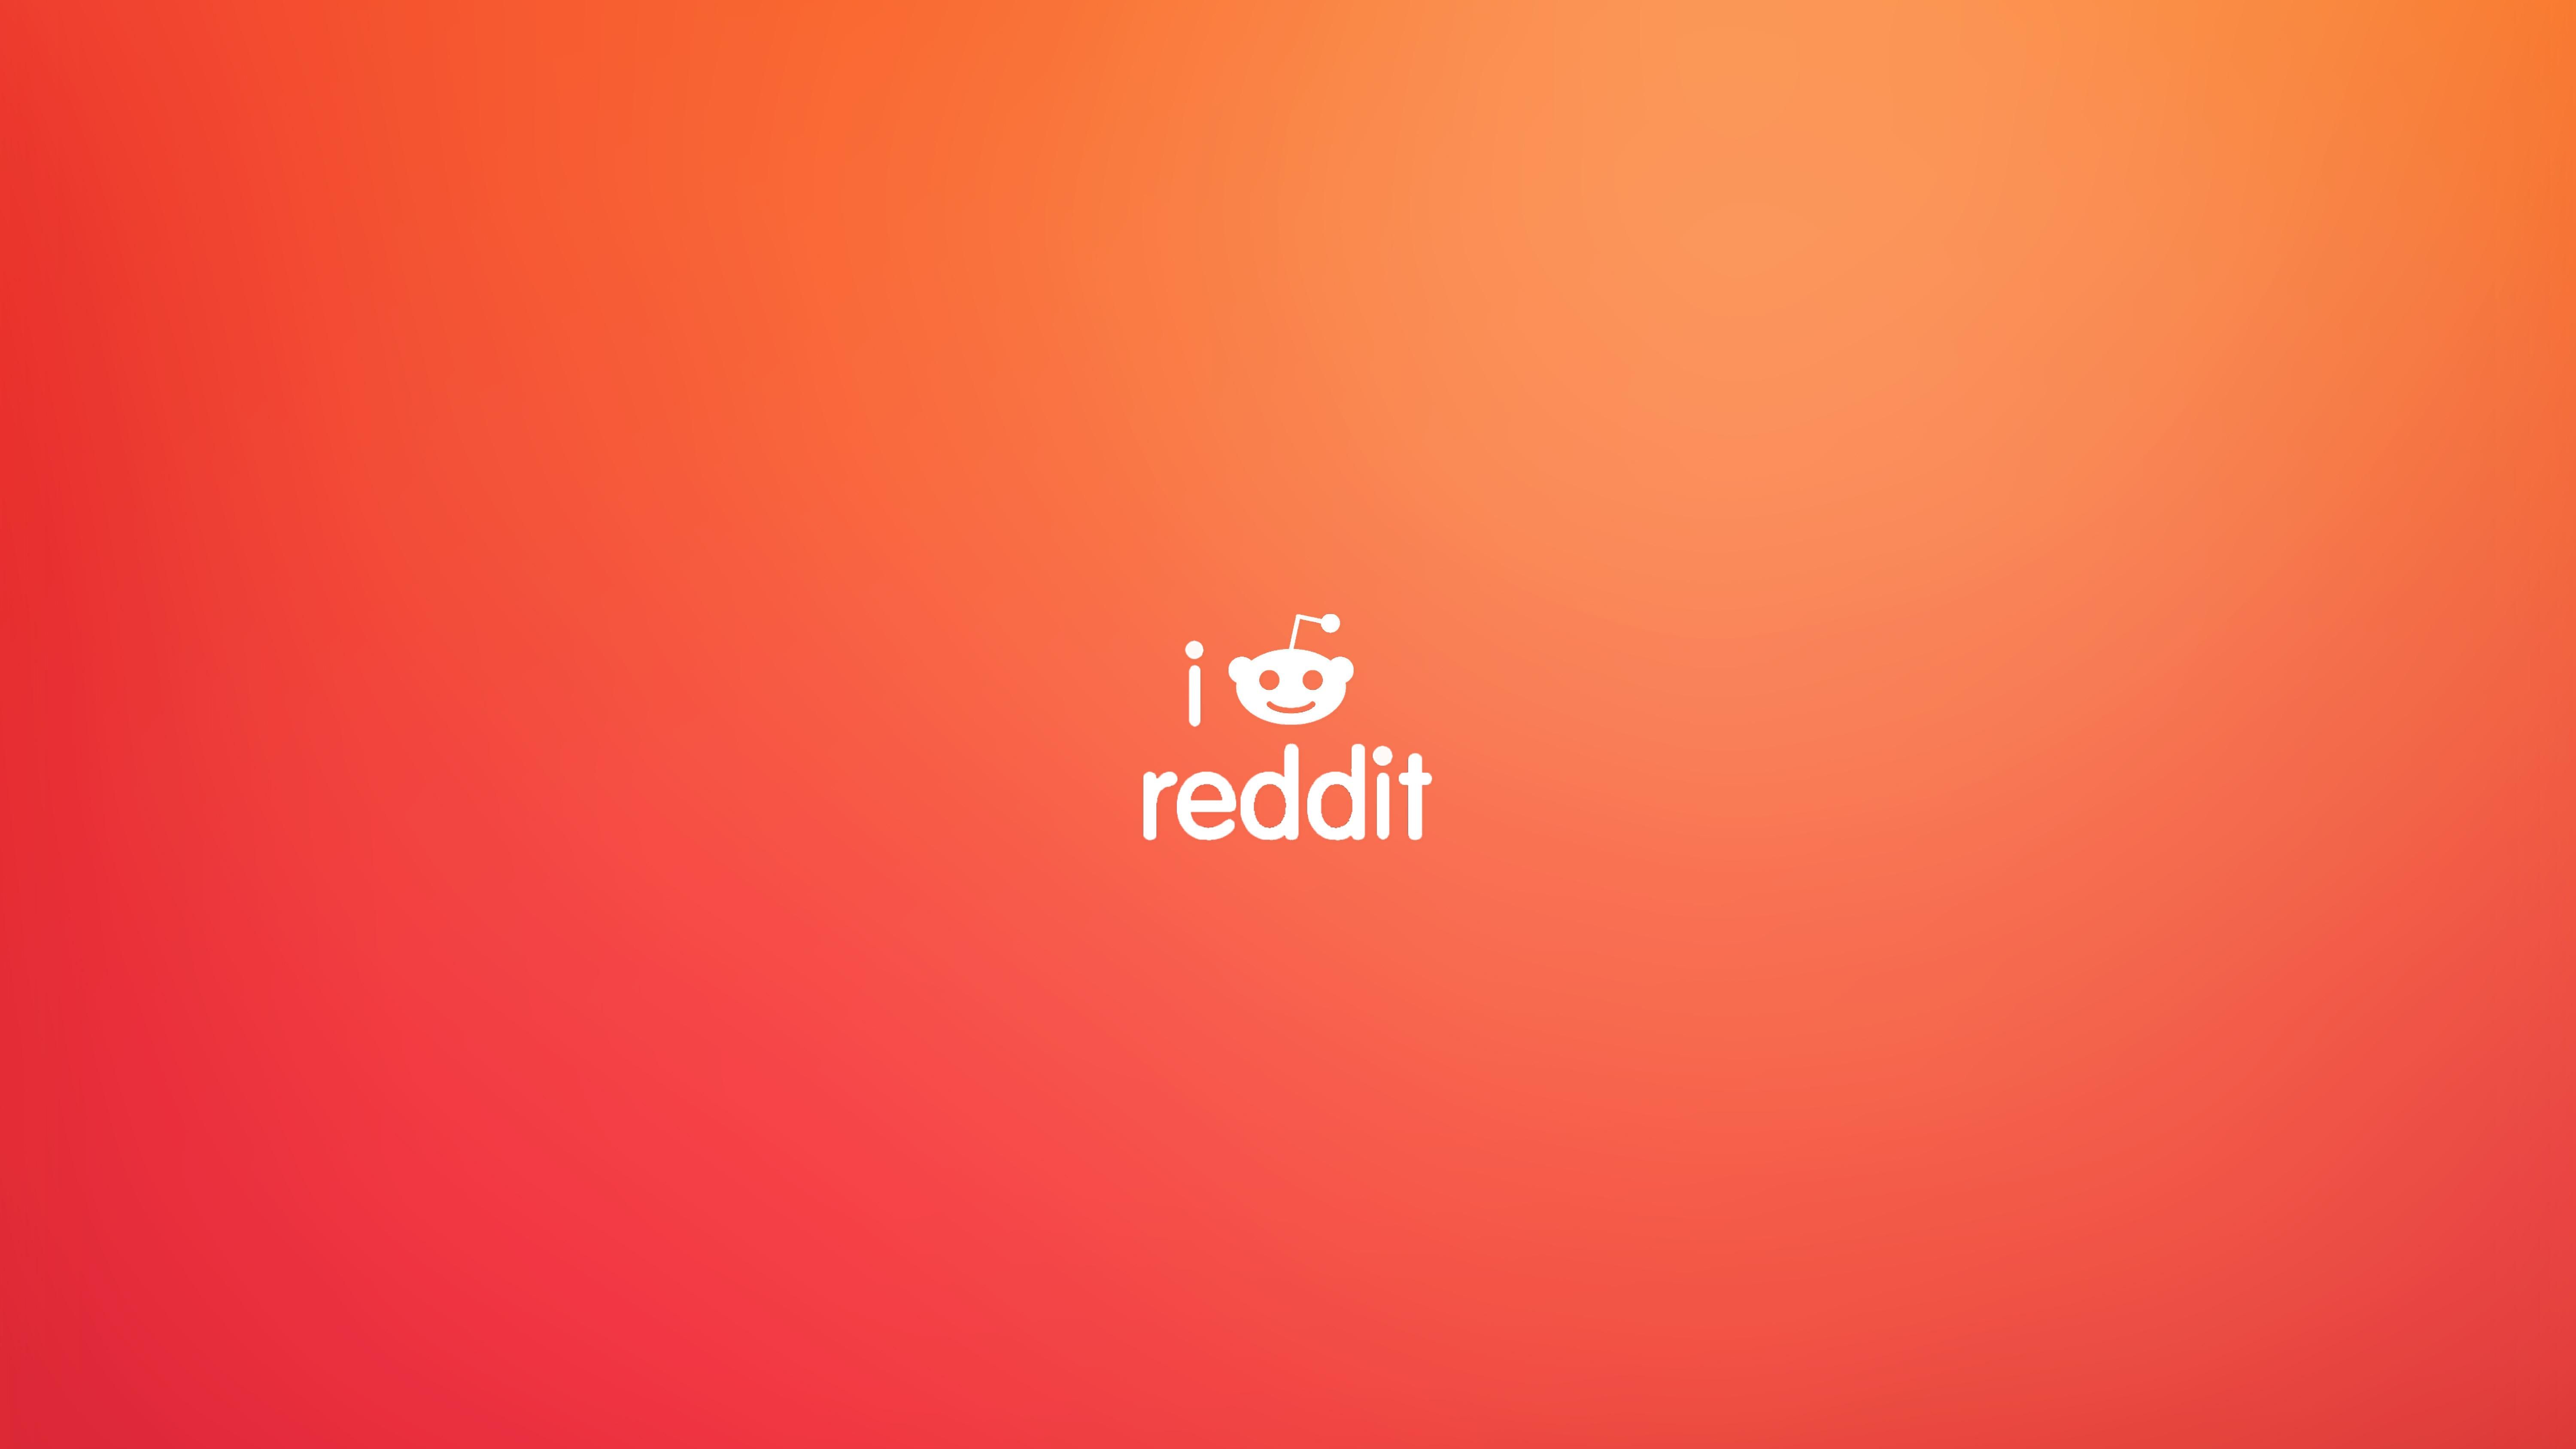 Reddit Background